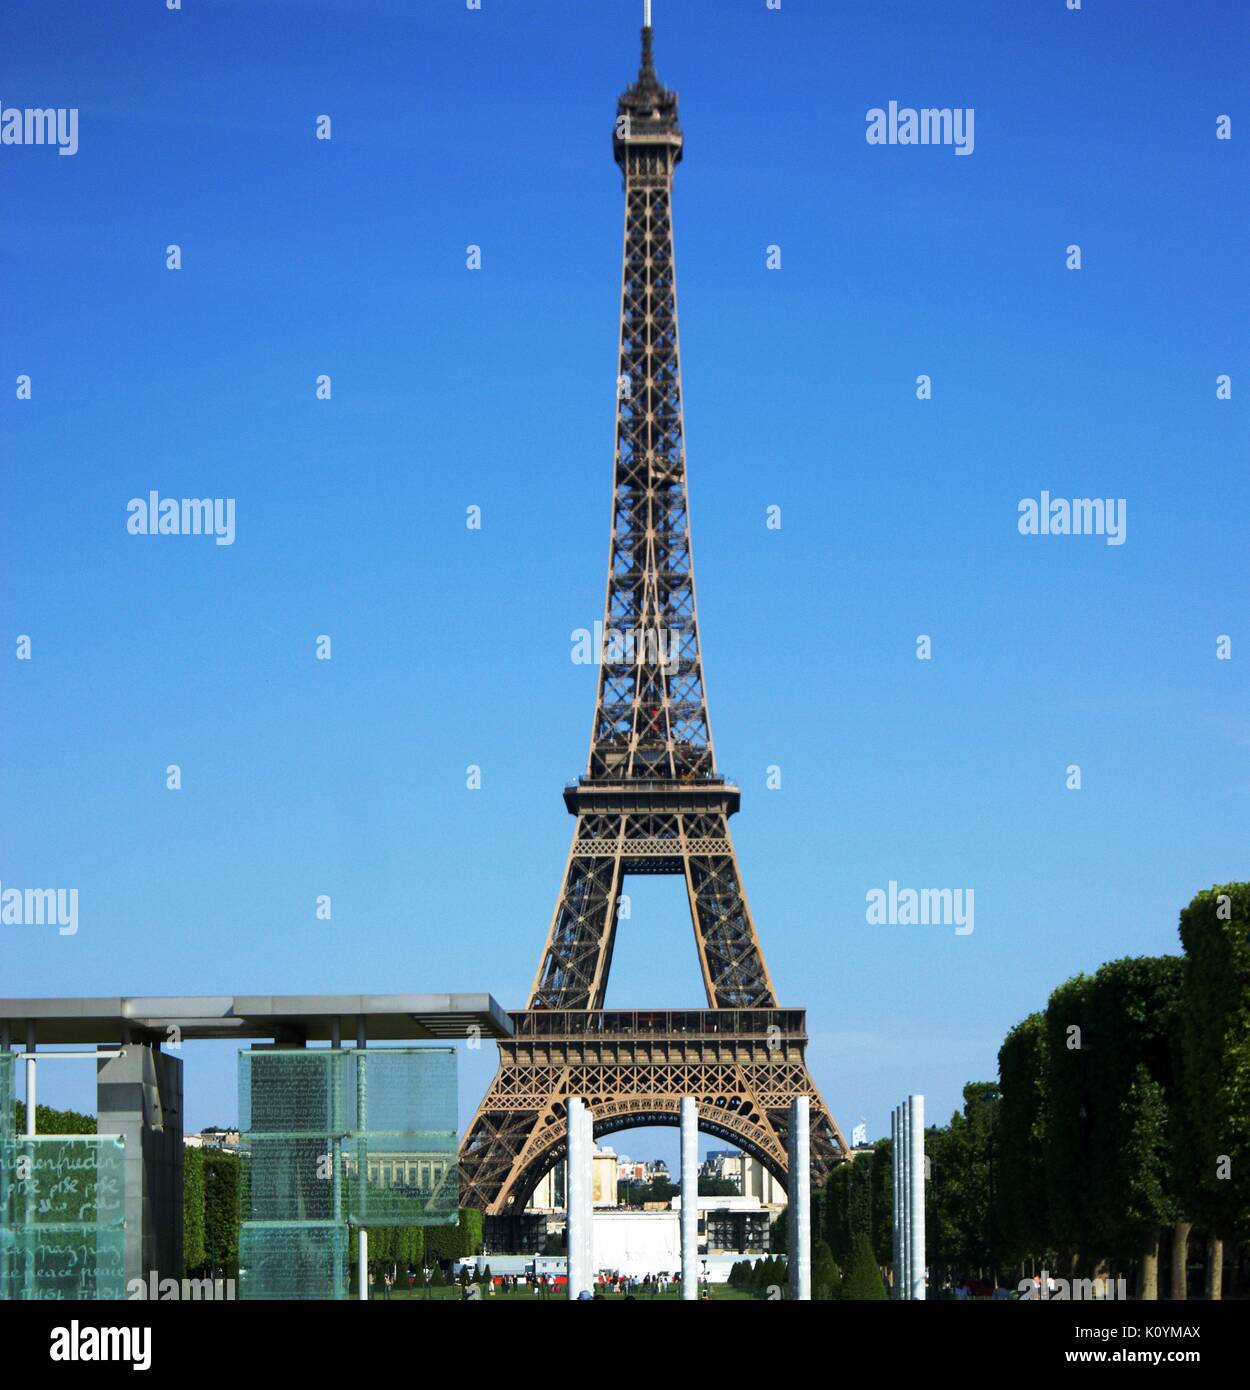 The Eiffel Tower, Paris, France Stock Photo